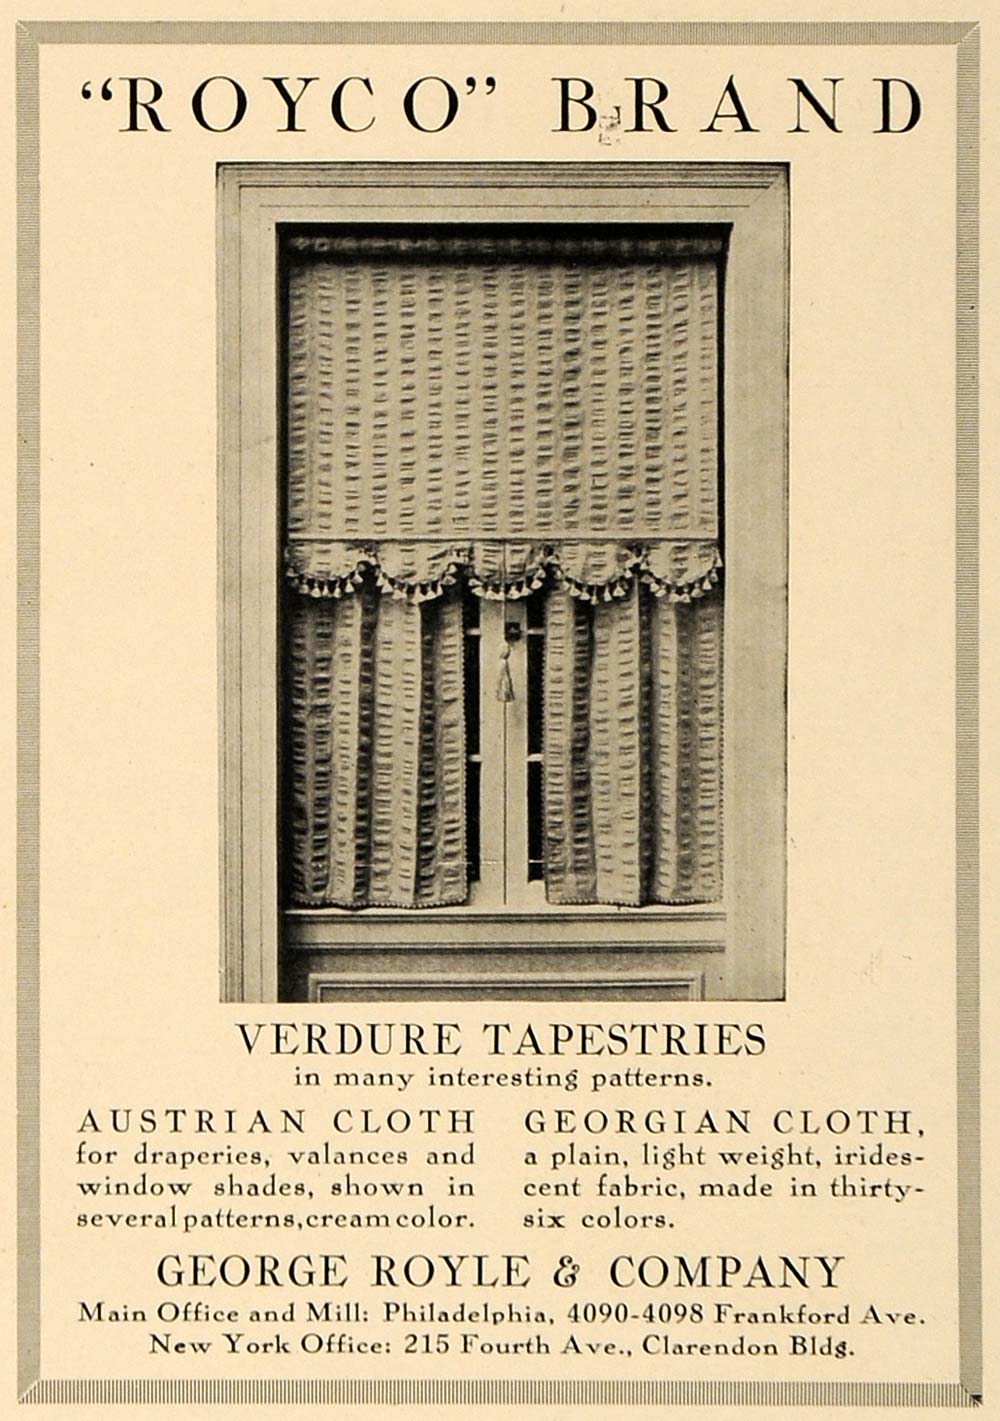 1918 Ad George Royle Royco Verdure Tapestries Decor - ORIGINAL ADVERTISING GF2